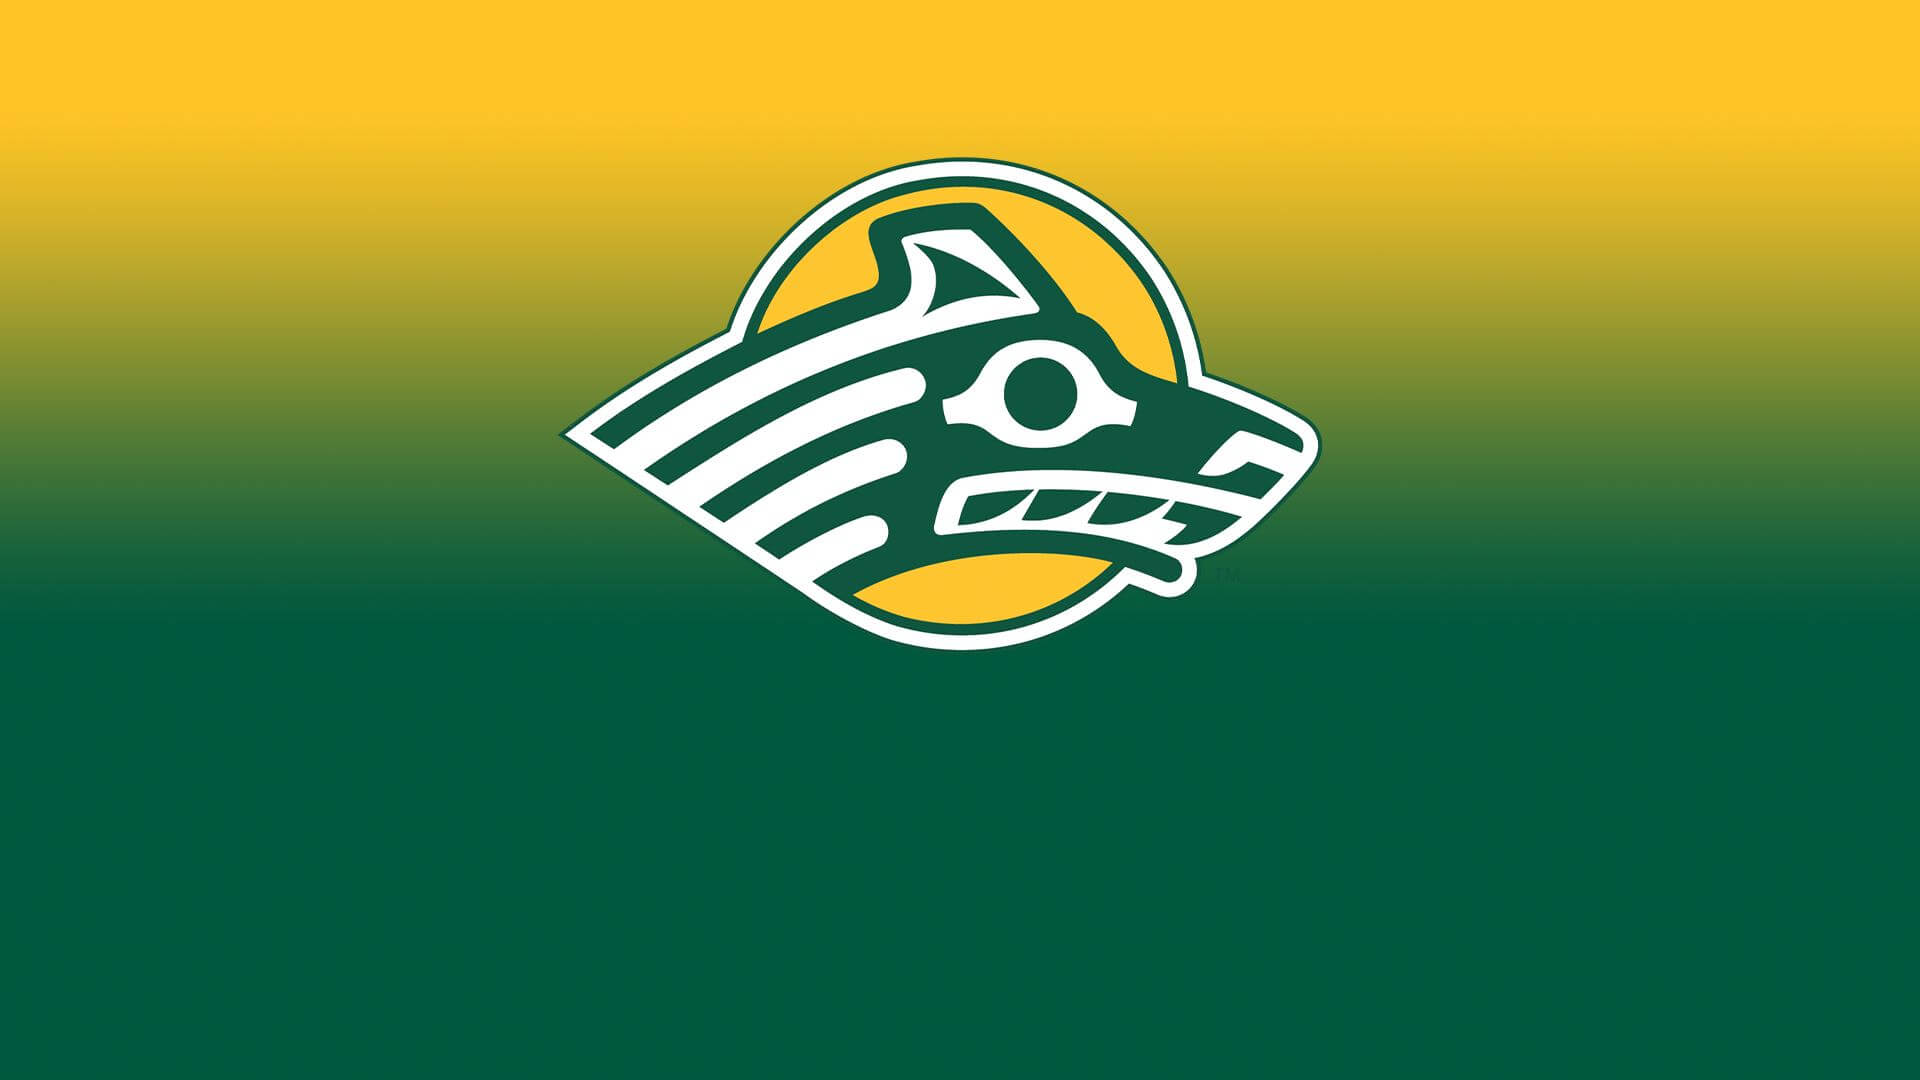 Seawolf logo against gold-green gradient background